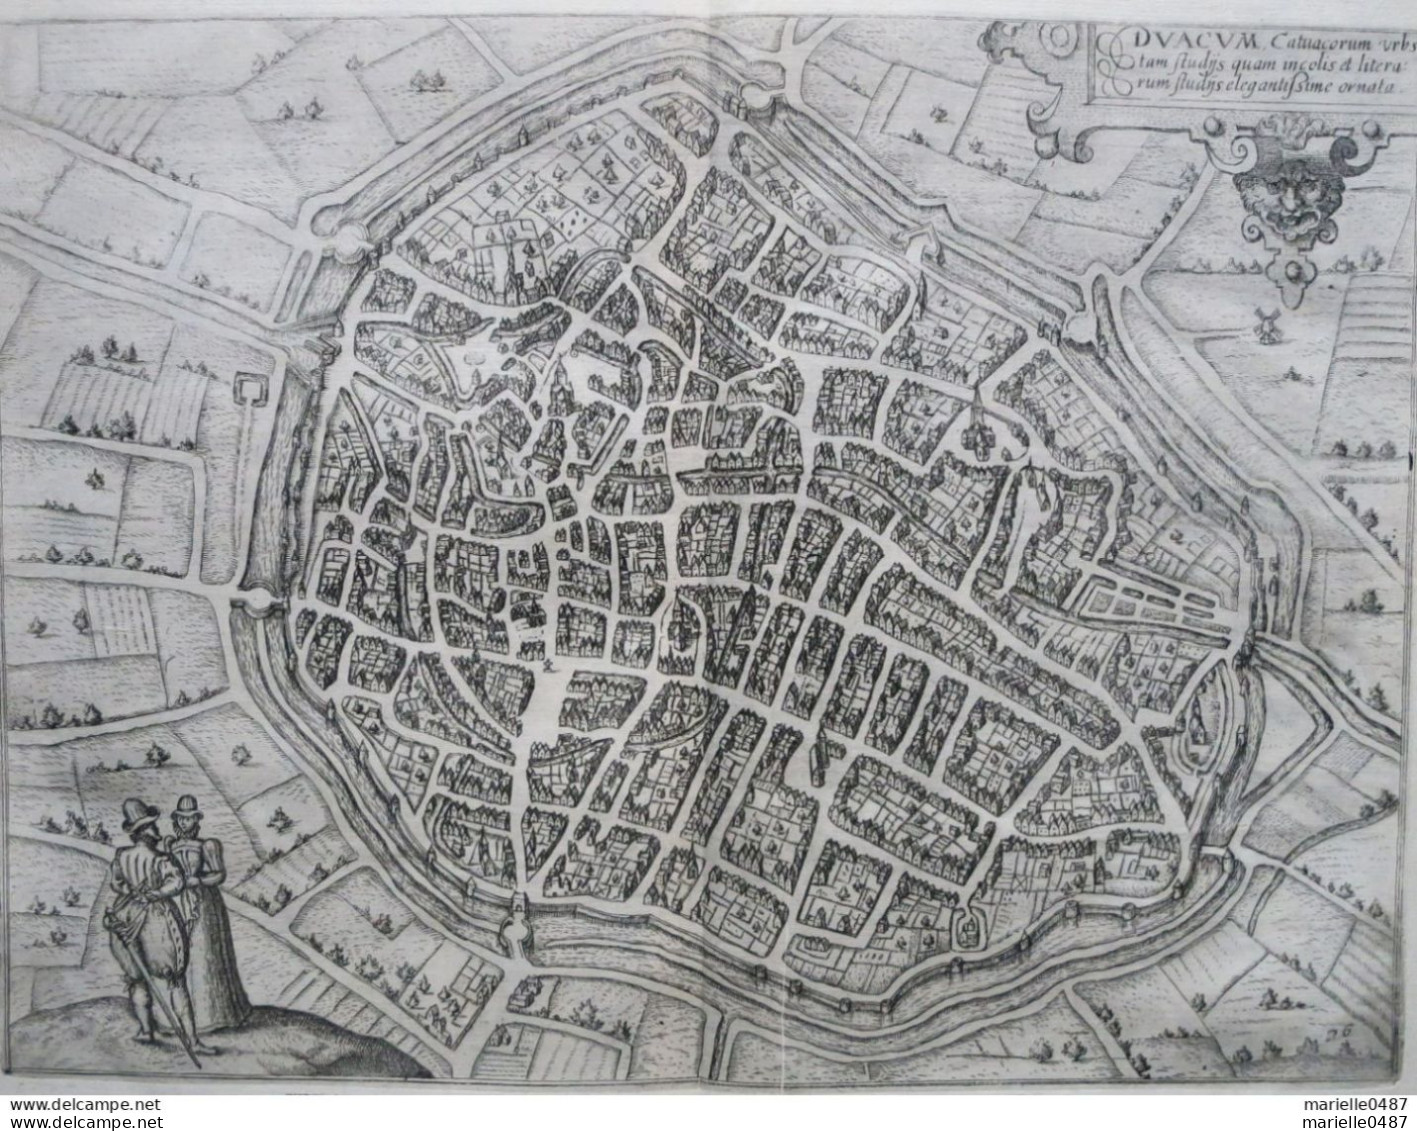 GUICCIARDINI - Plan De La Ville De Douai 1567 - Geographische Kaarten